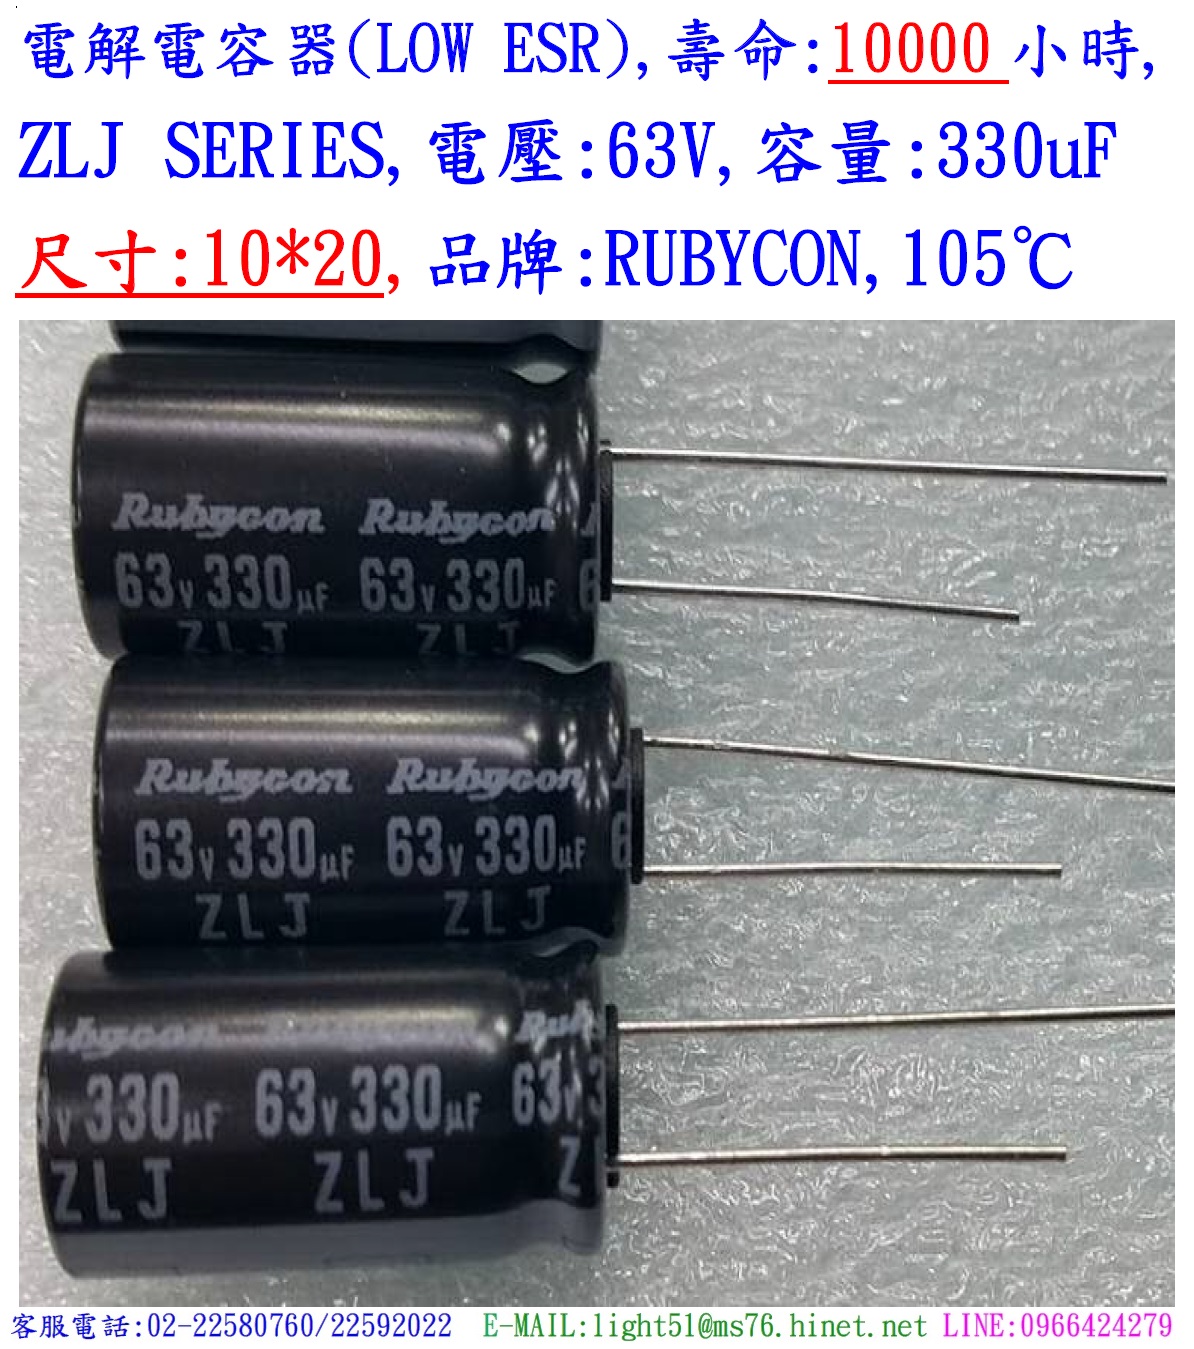 ZLJ,63V,330uF,尺寸:10*20,電解電容器(LOW ESR),壽命:10000小時,Rubycon